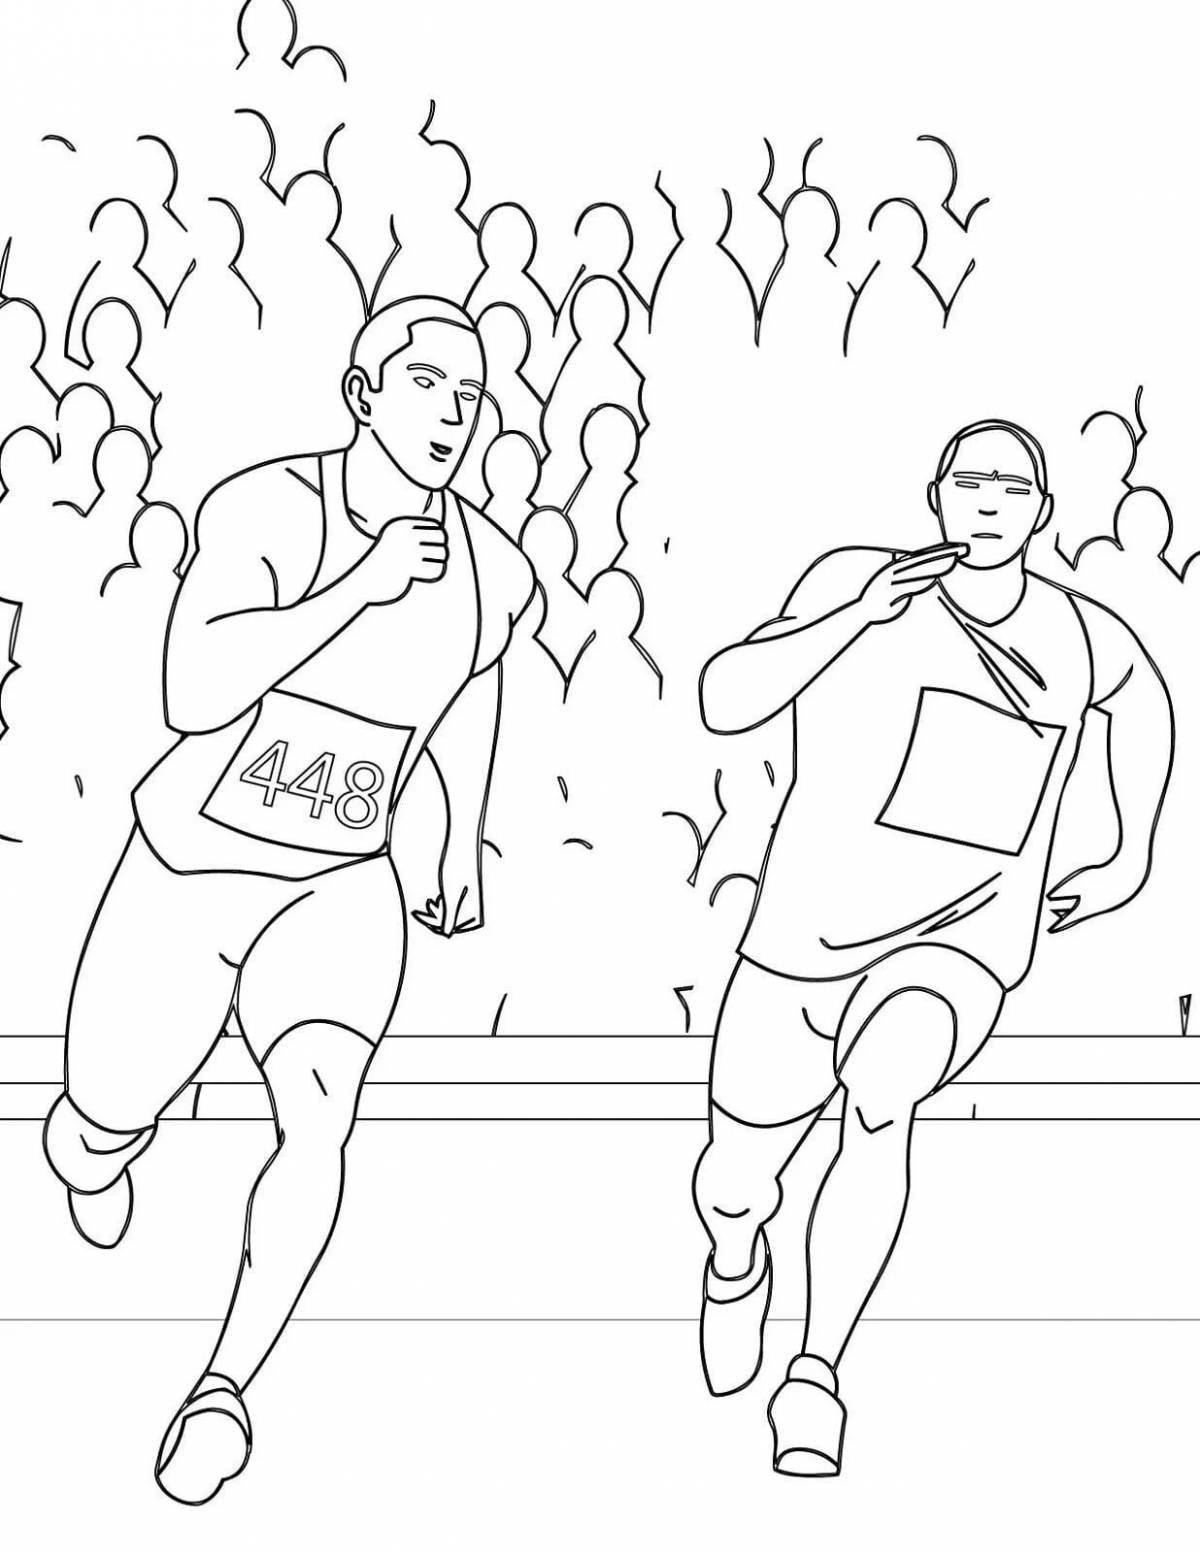 Animated running man